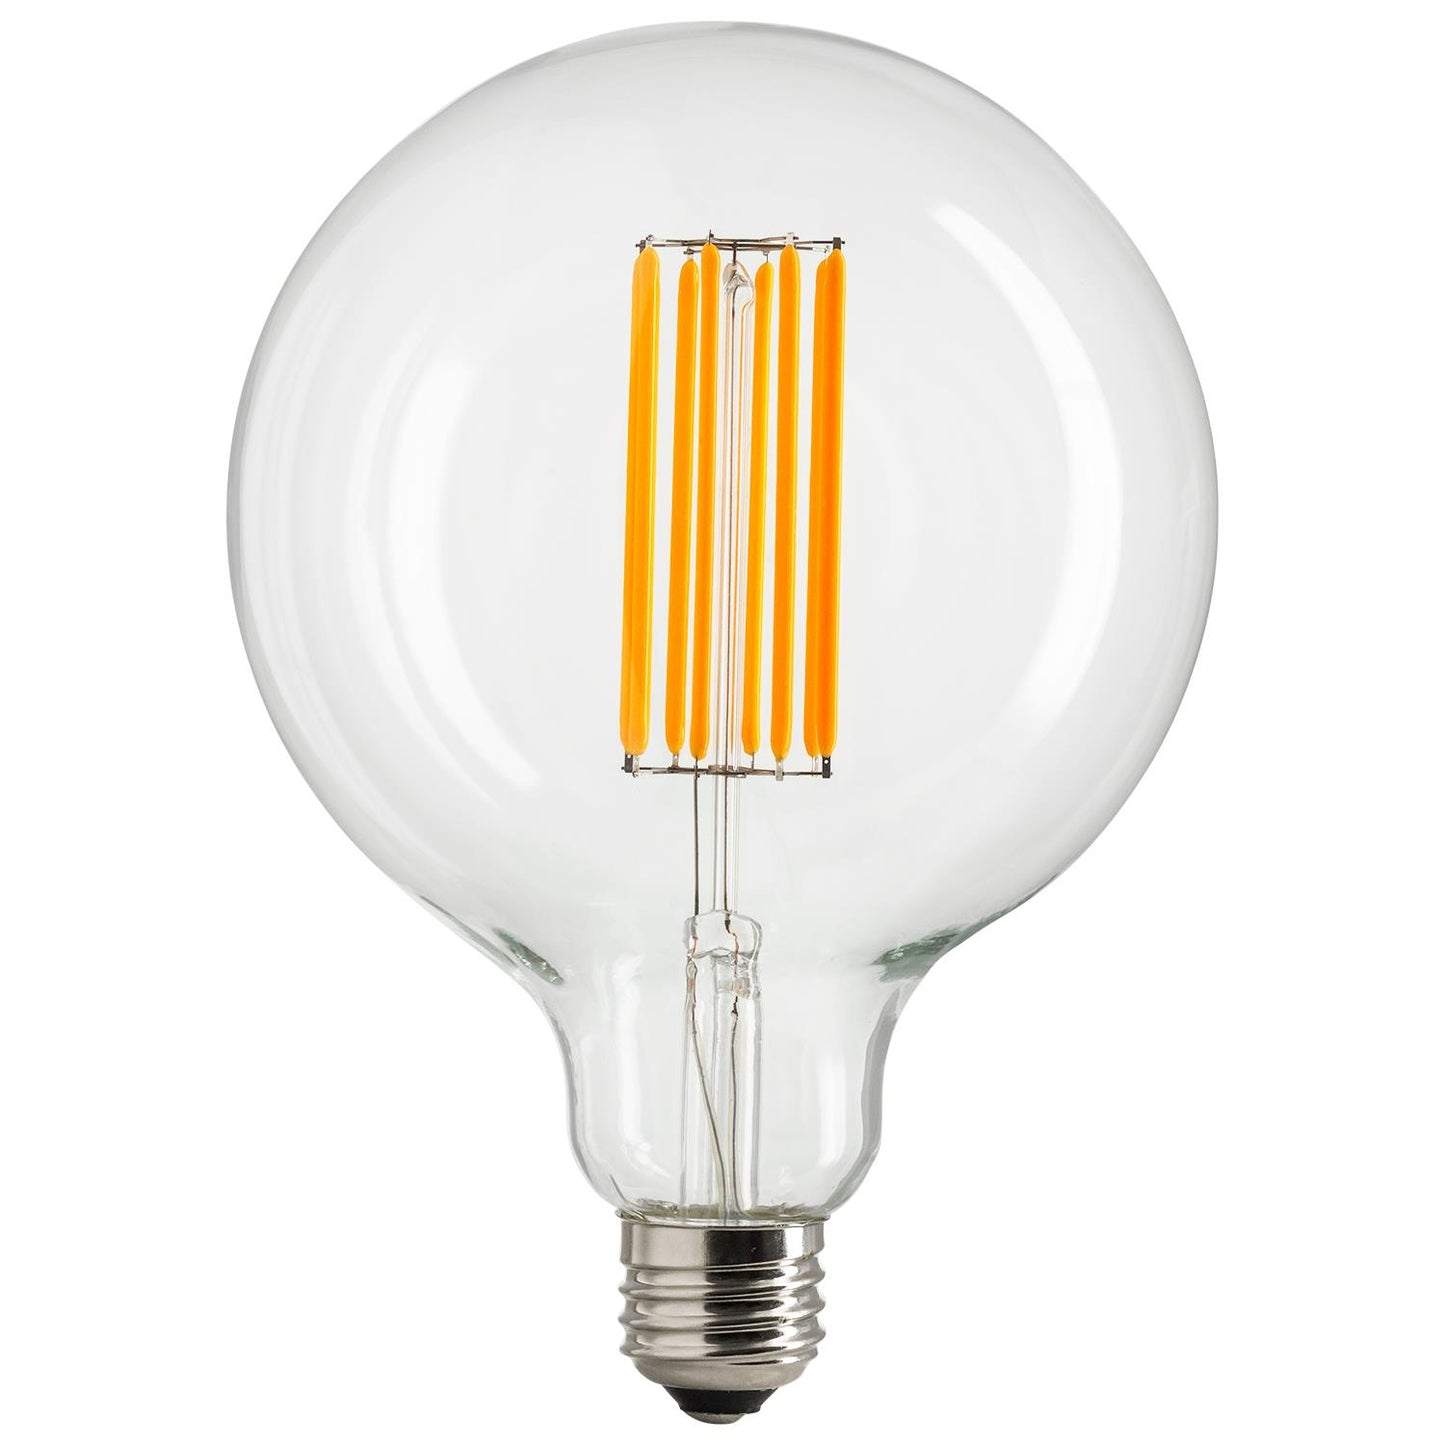 Sunlite LED Vintage G40 Globe 8W (100W Equivalent) Light Bulb Medium (E26) Base, Warm White